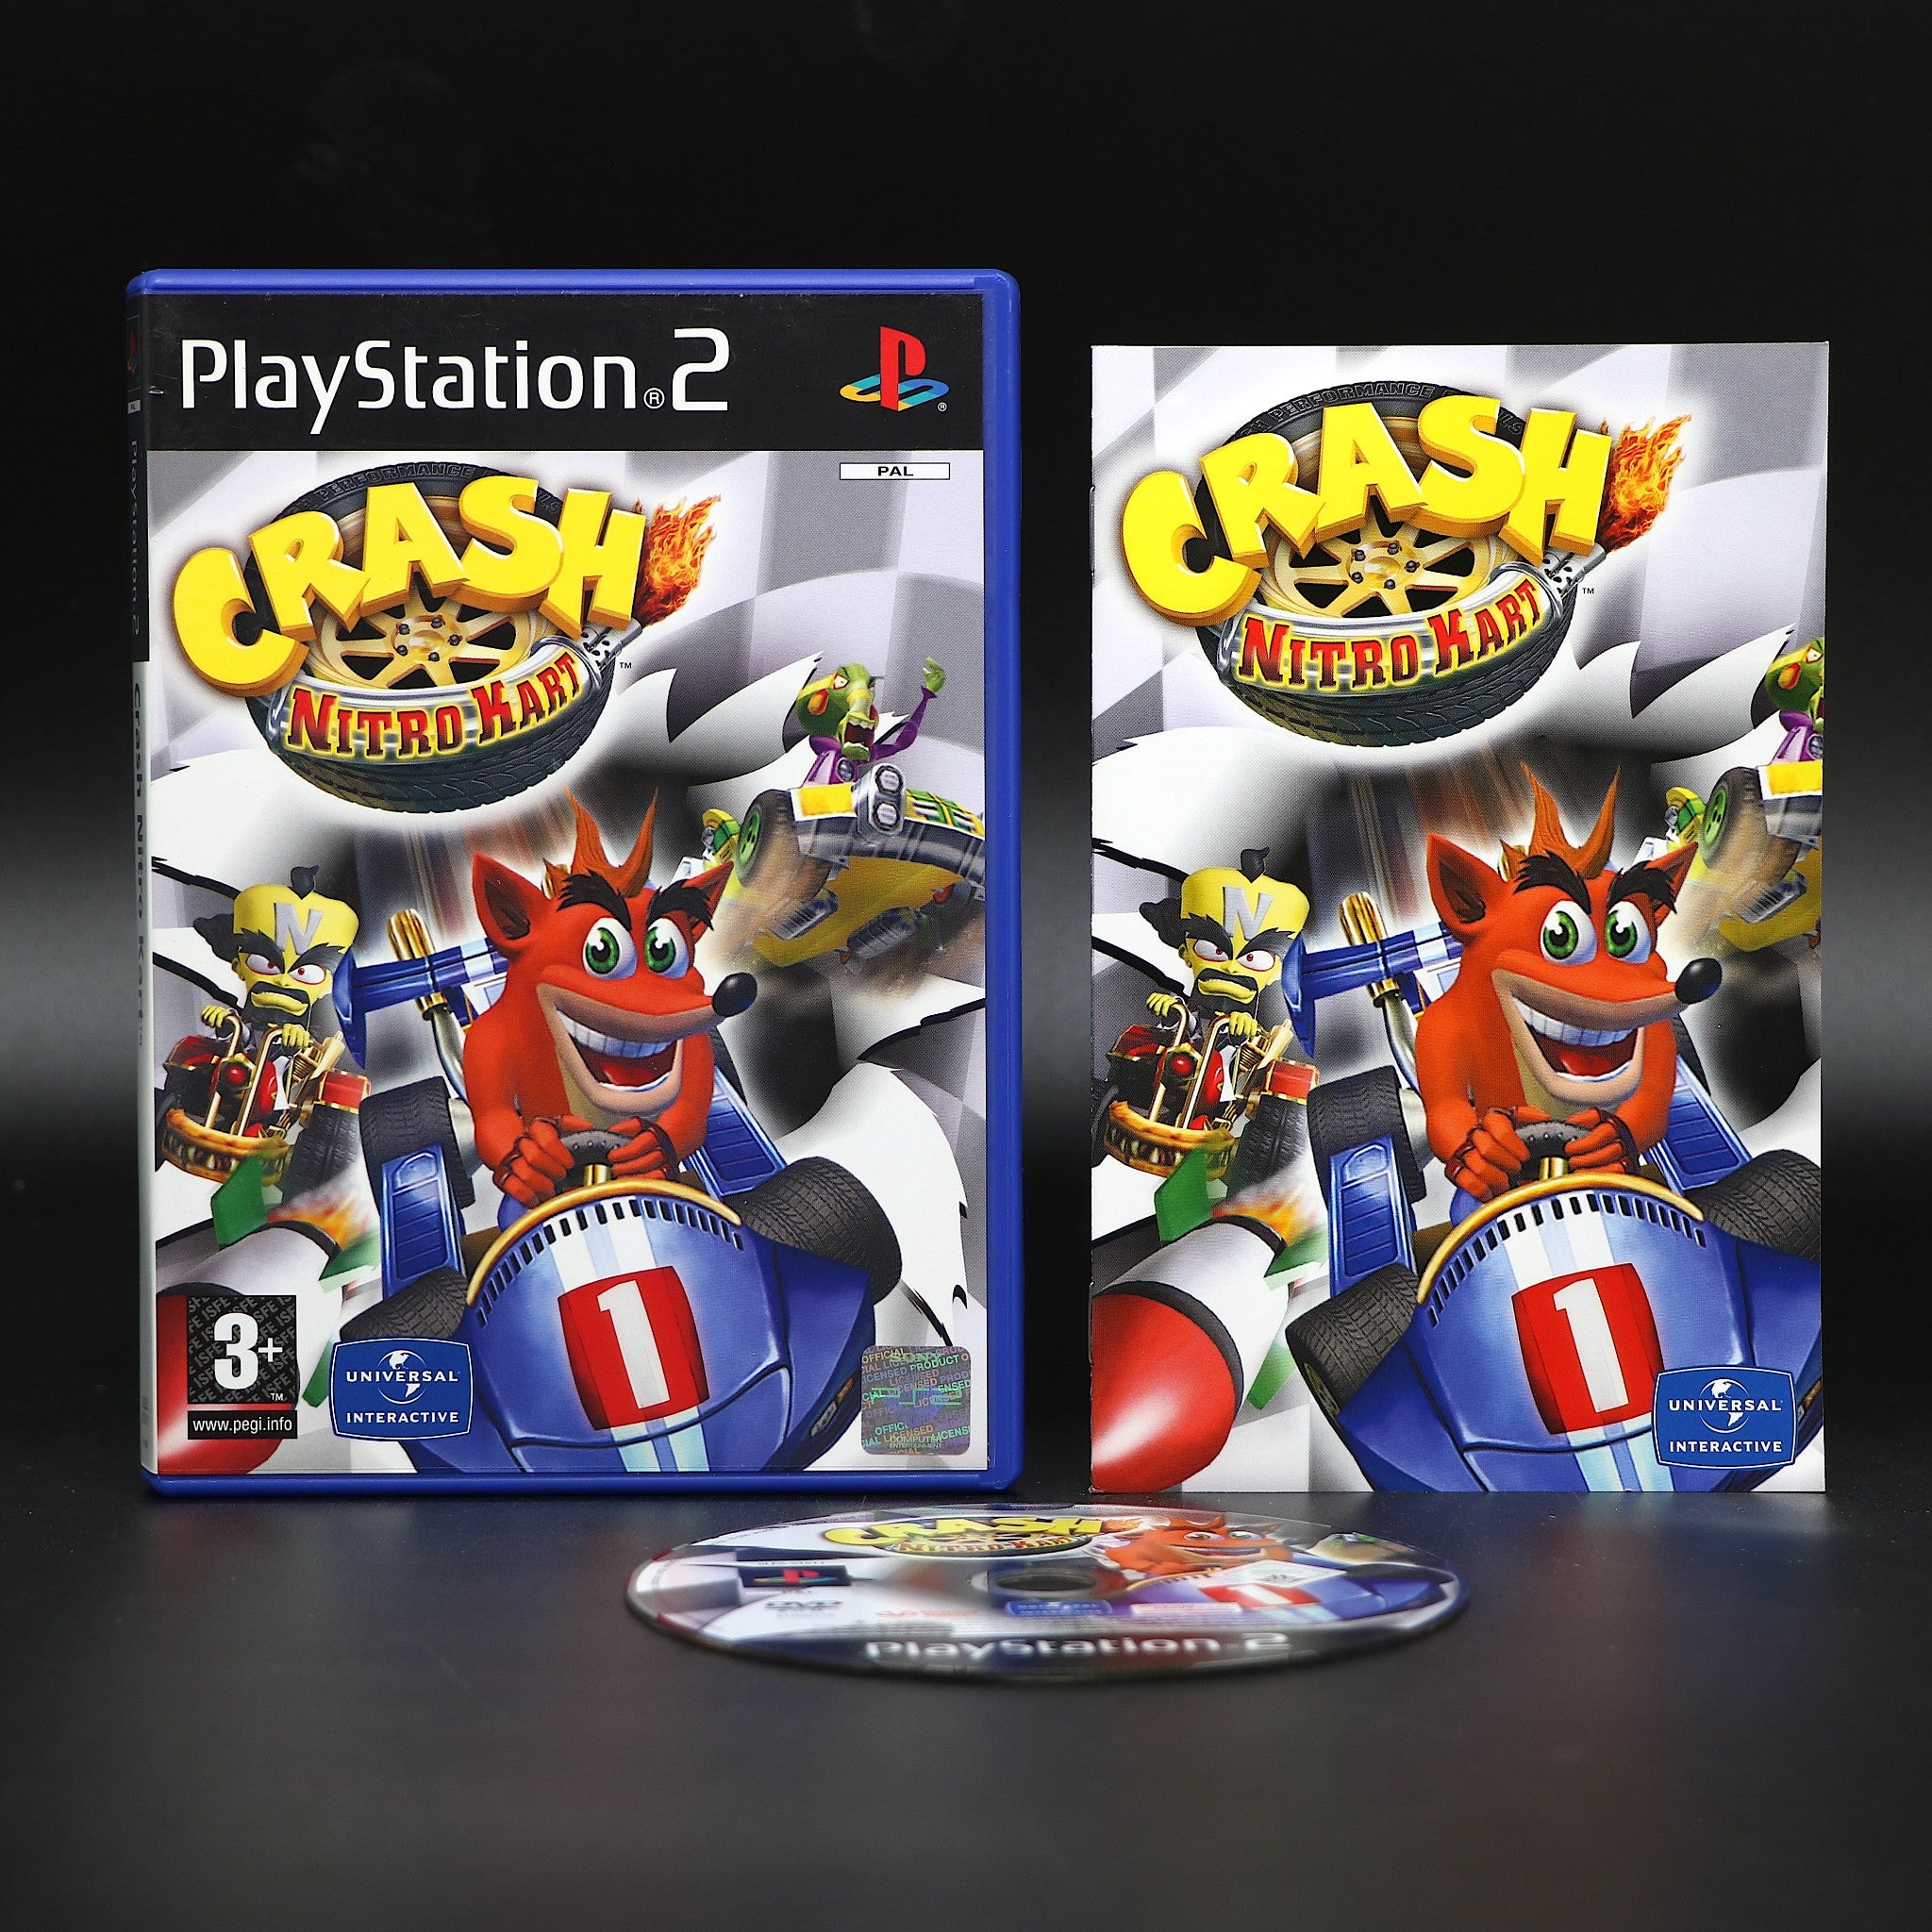 Crash Nitro Kart (Bandicoot) | Sony Playstation PS2 Game | Brand New Not Sealed